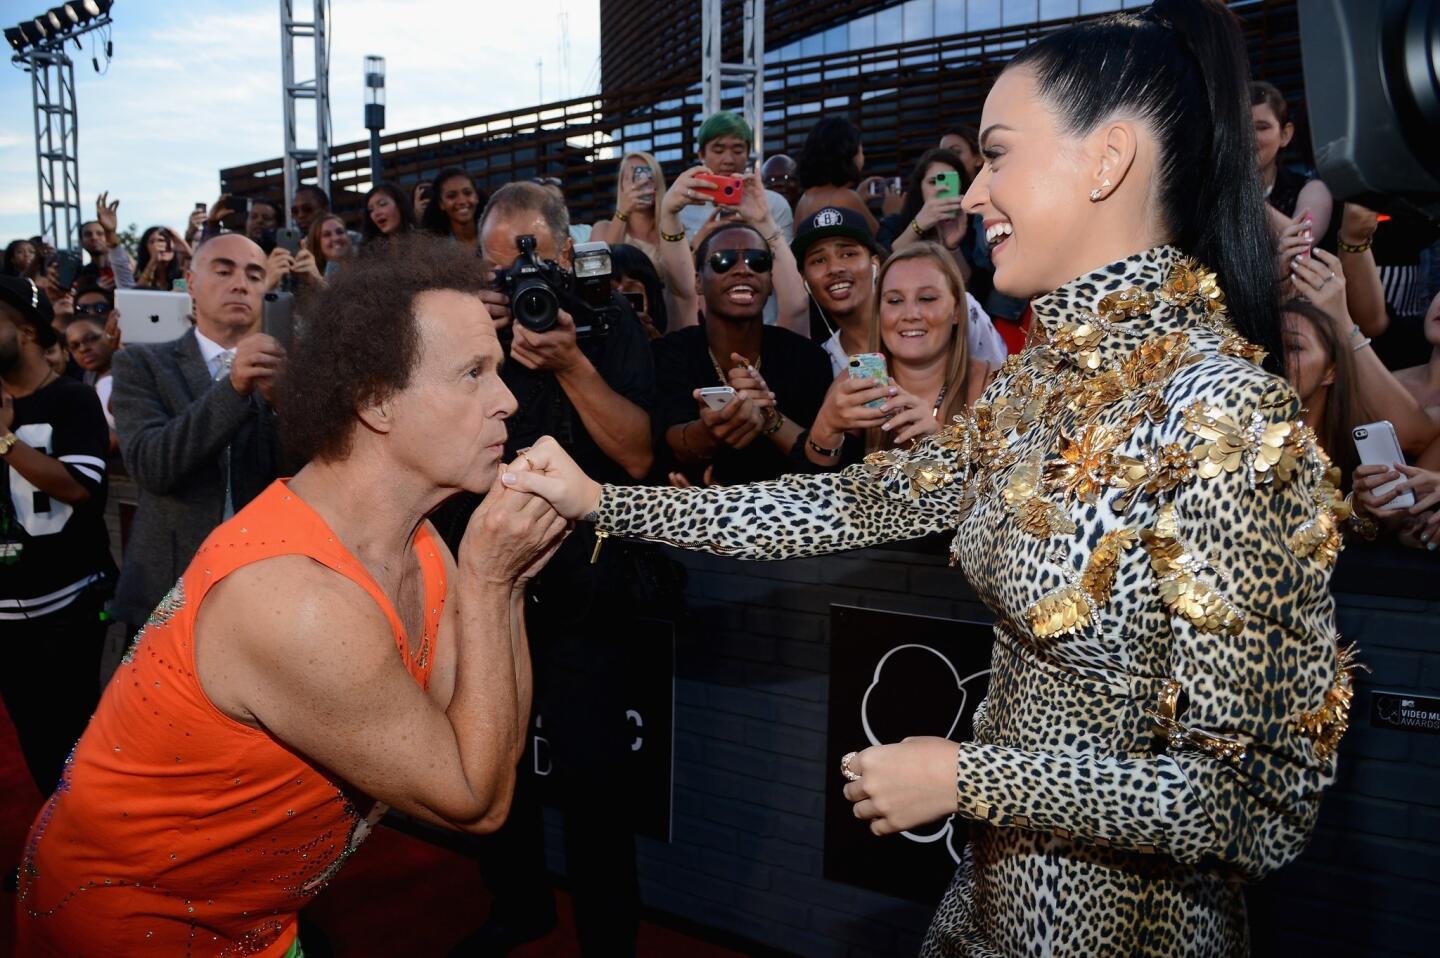 Exercise guru Richard Simmons greets Katy Perry.